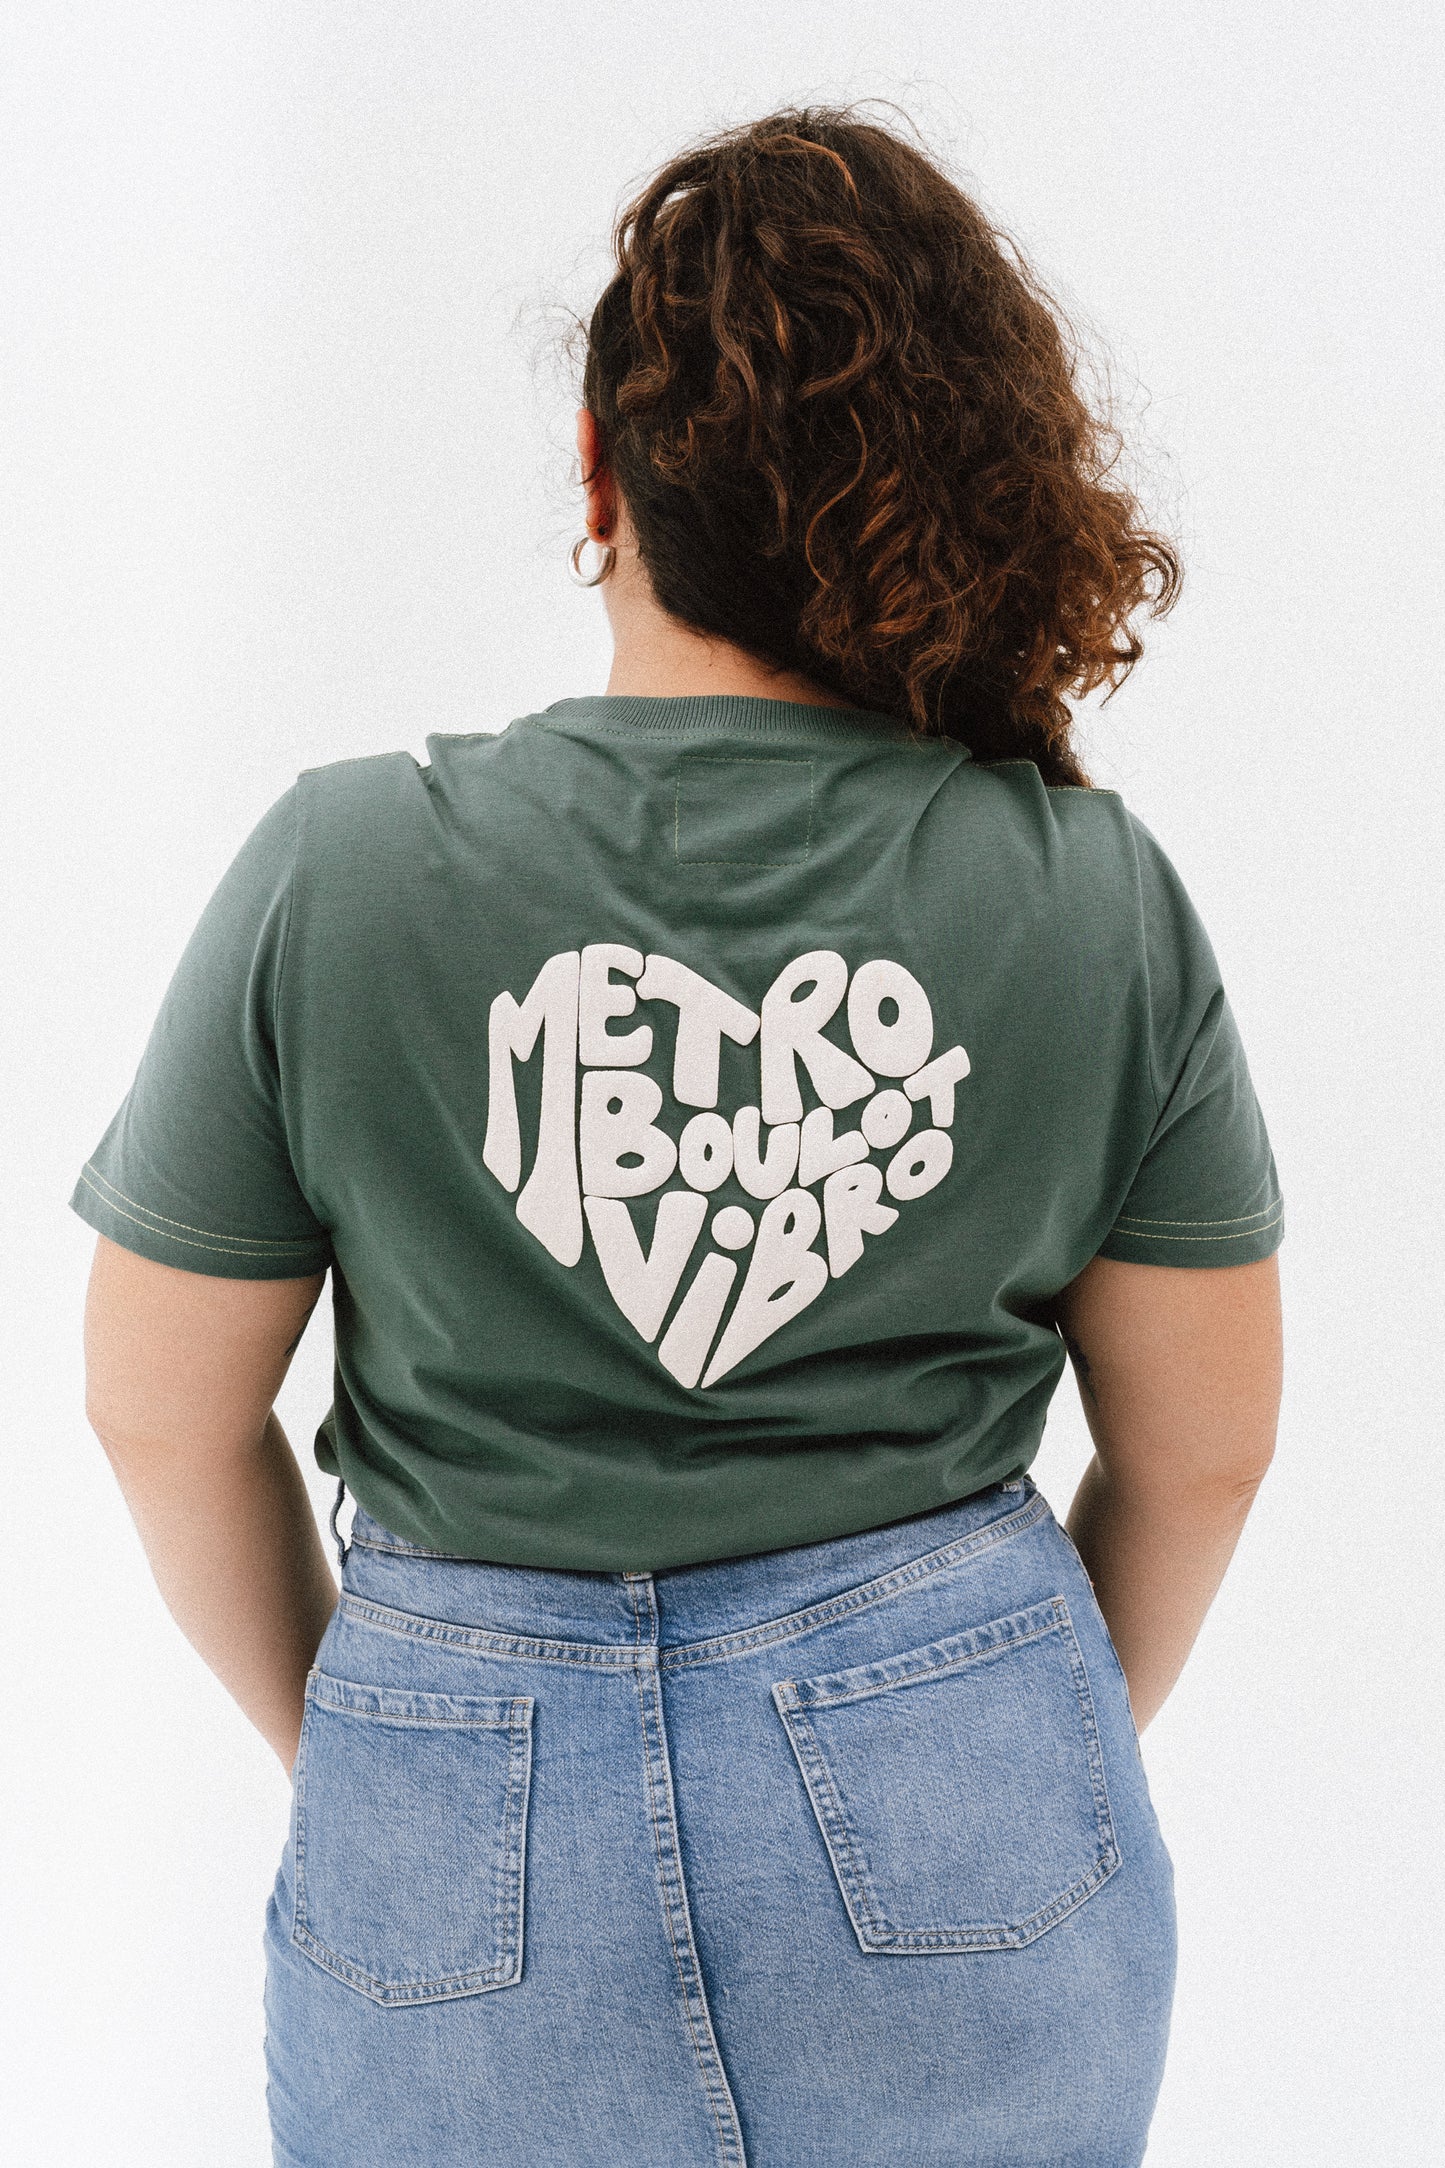 Tee-shirt Métro boulot vibro *